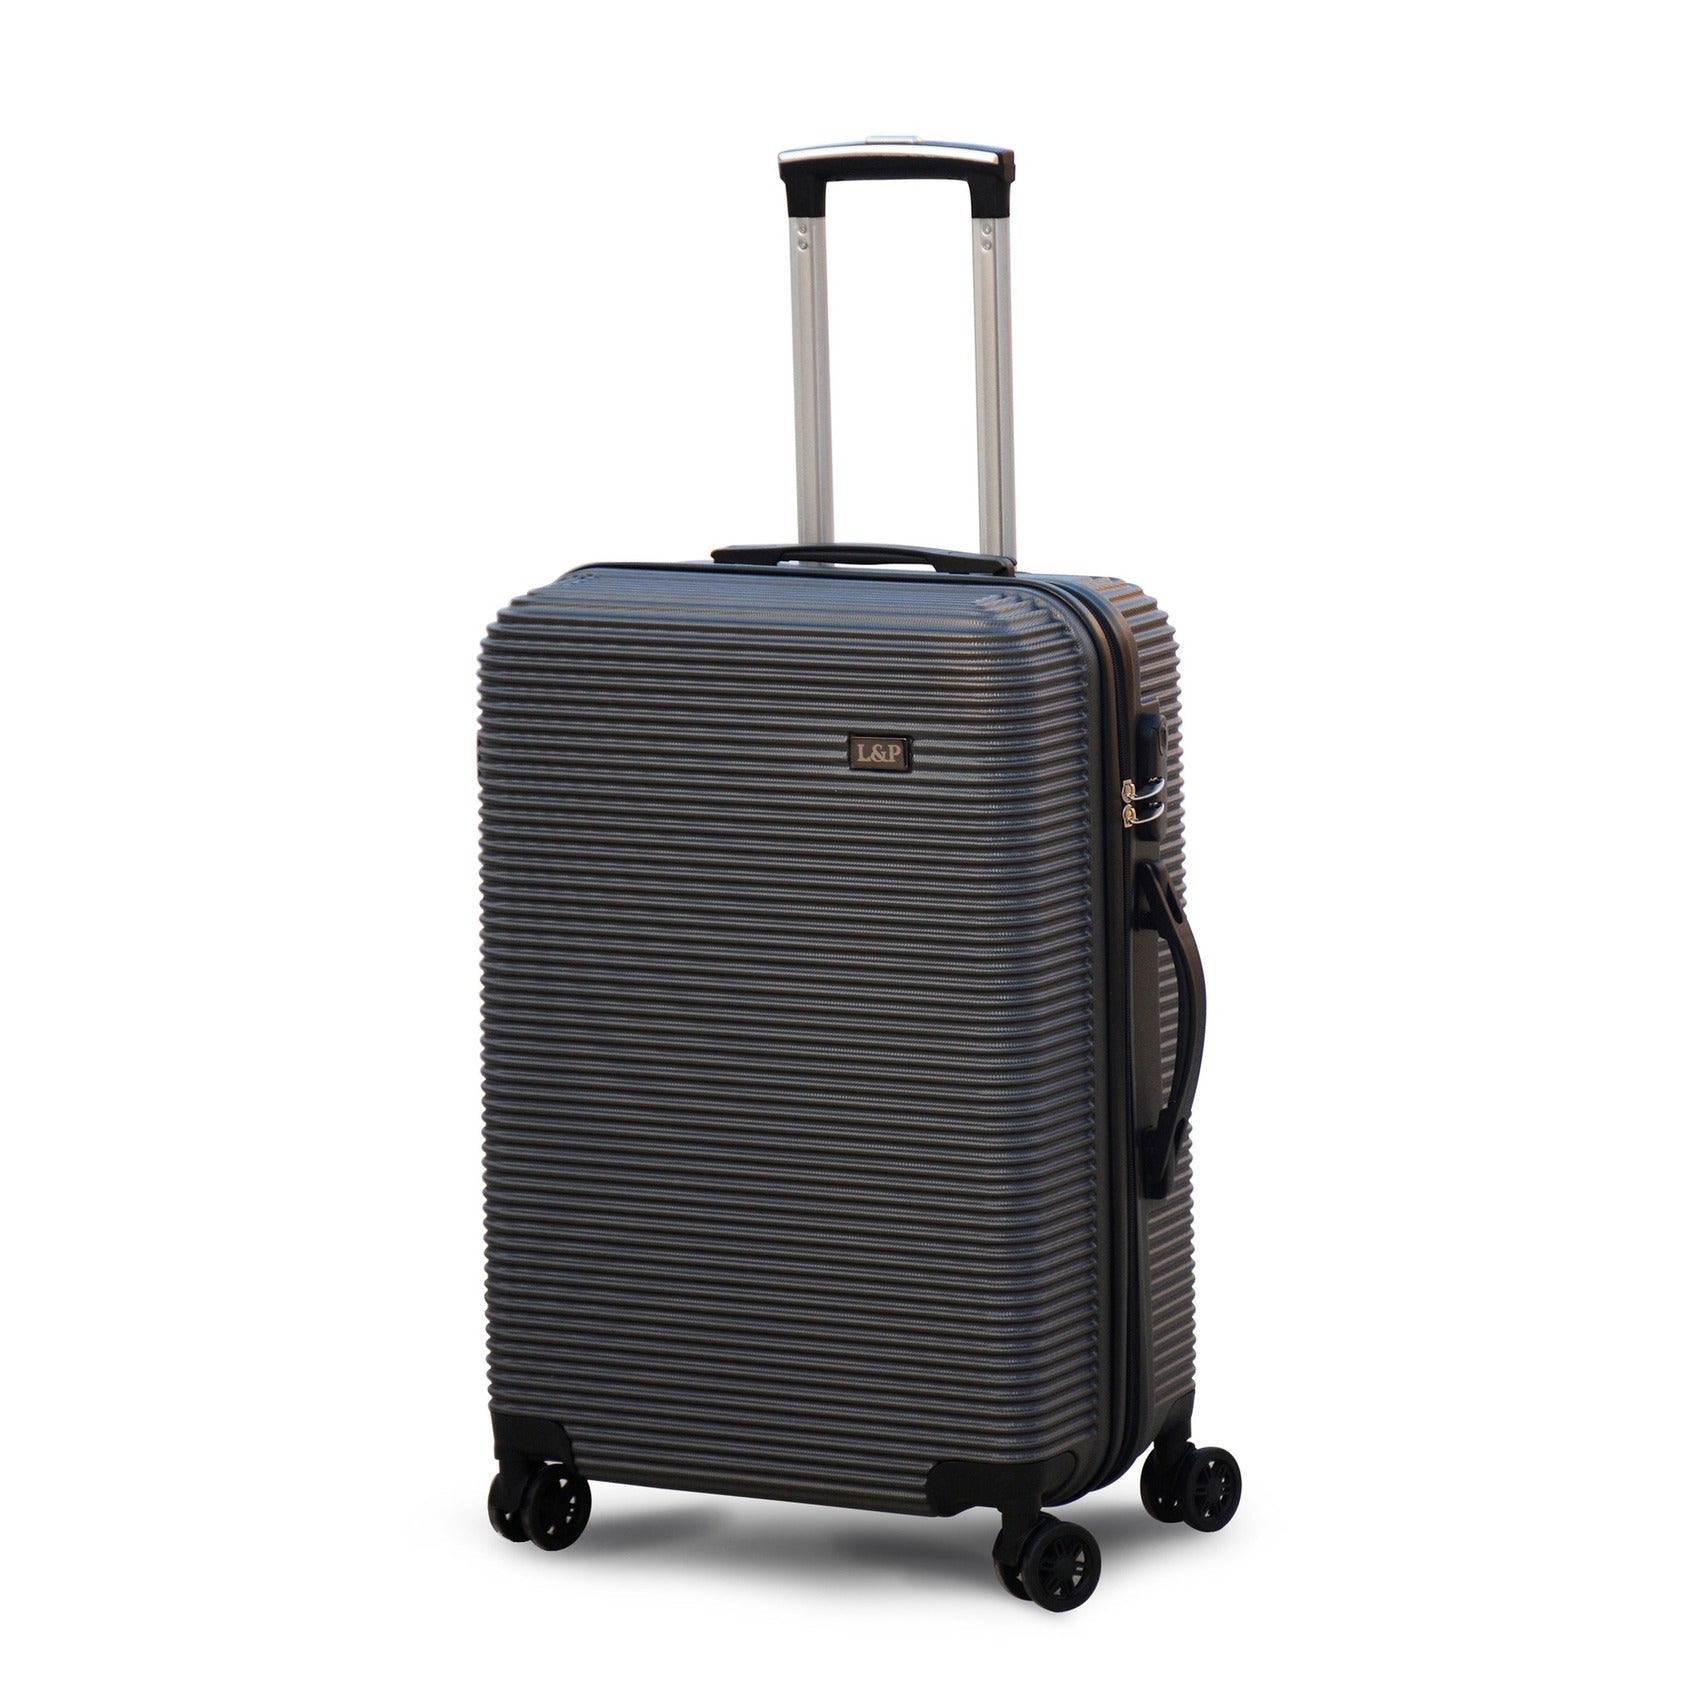 24" Dark Grey Colour JIAN ABS Line Luggage Lightweight Hard Case Trolley Bag with Spinner Wheel